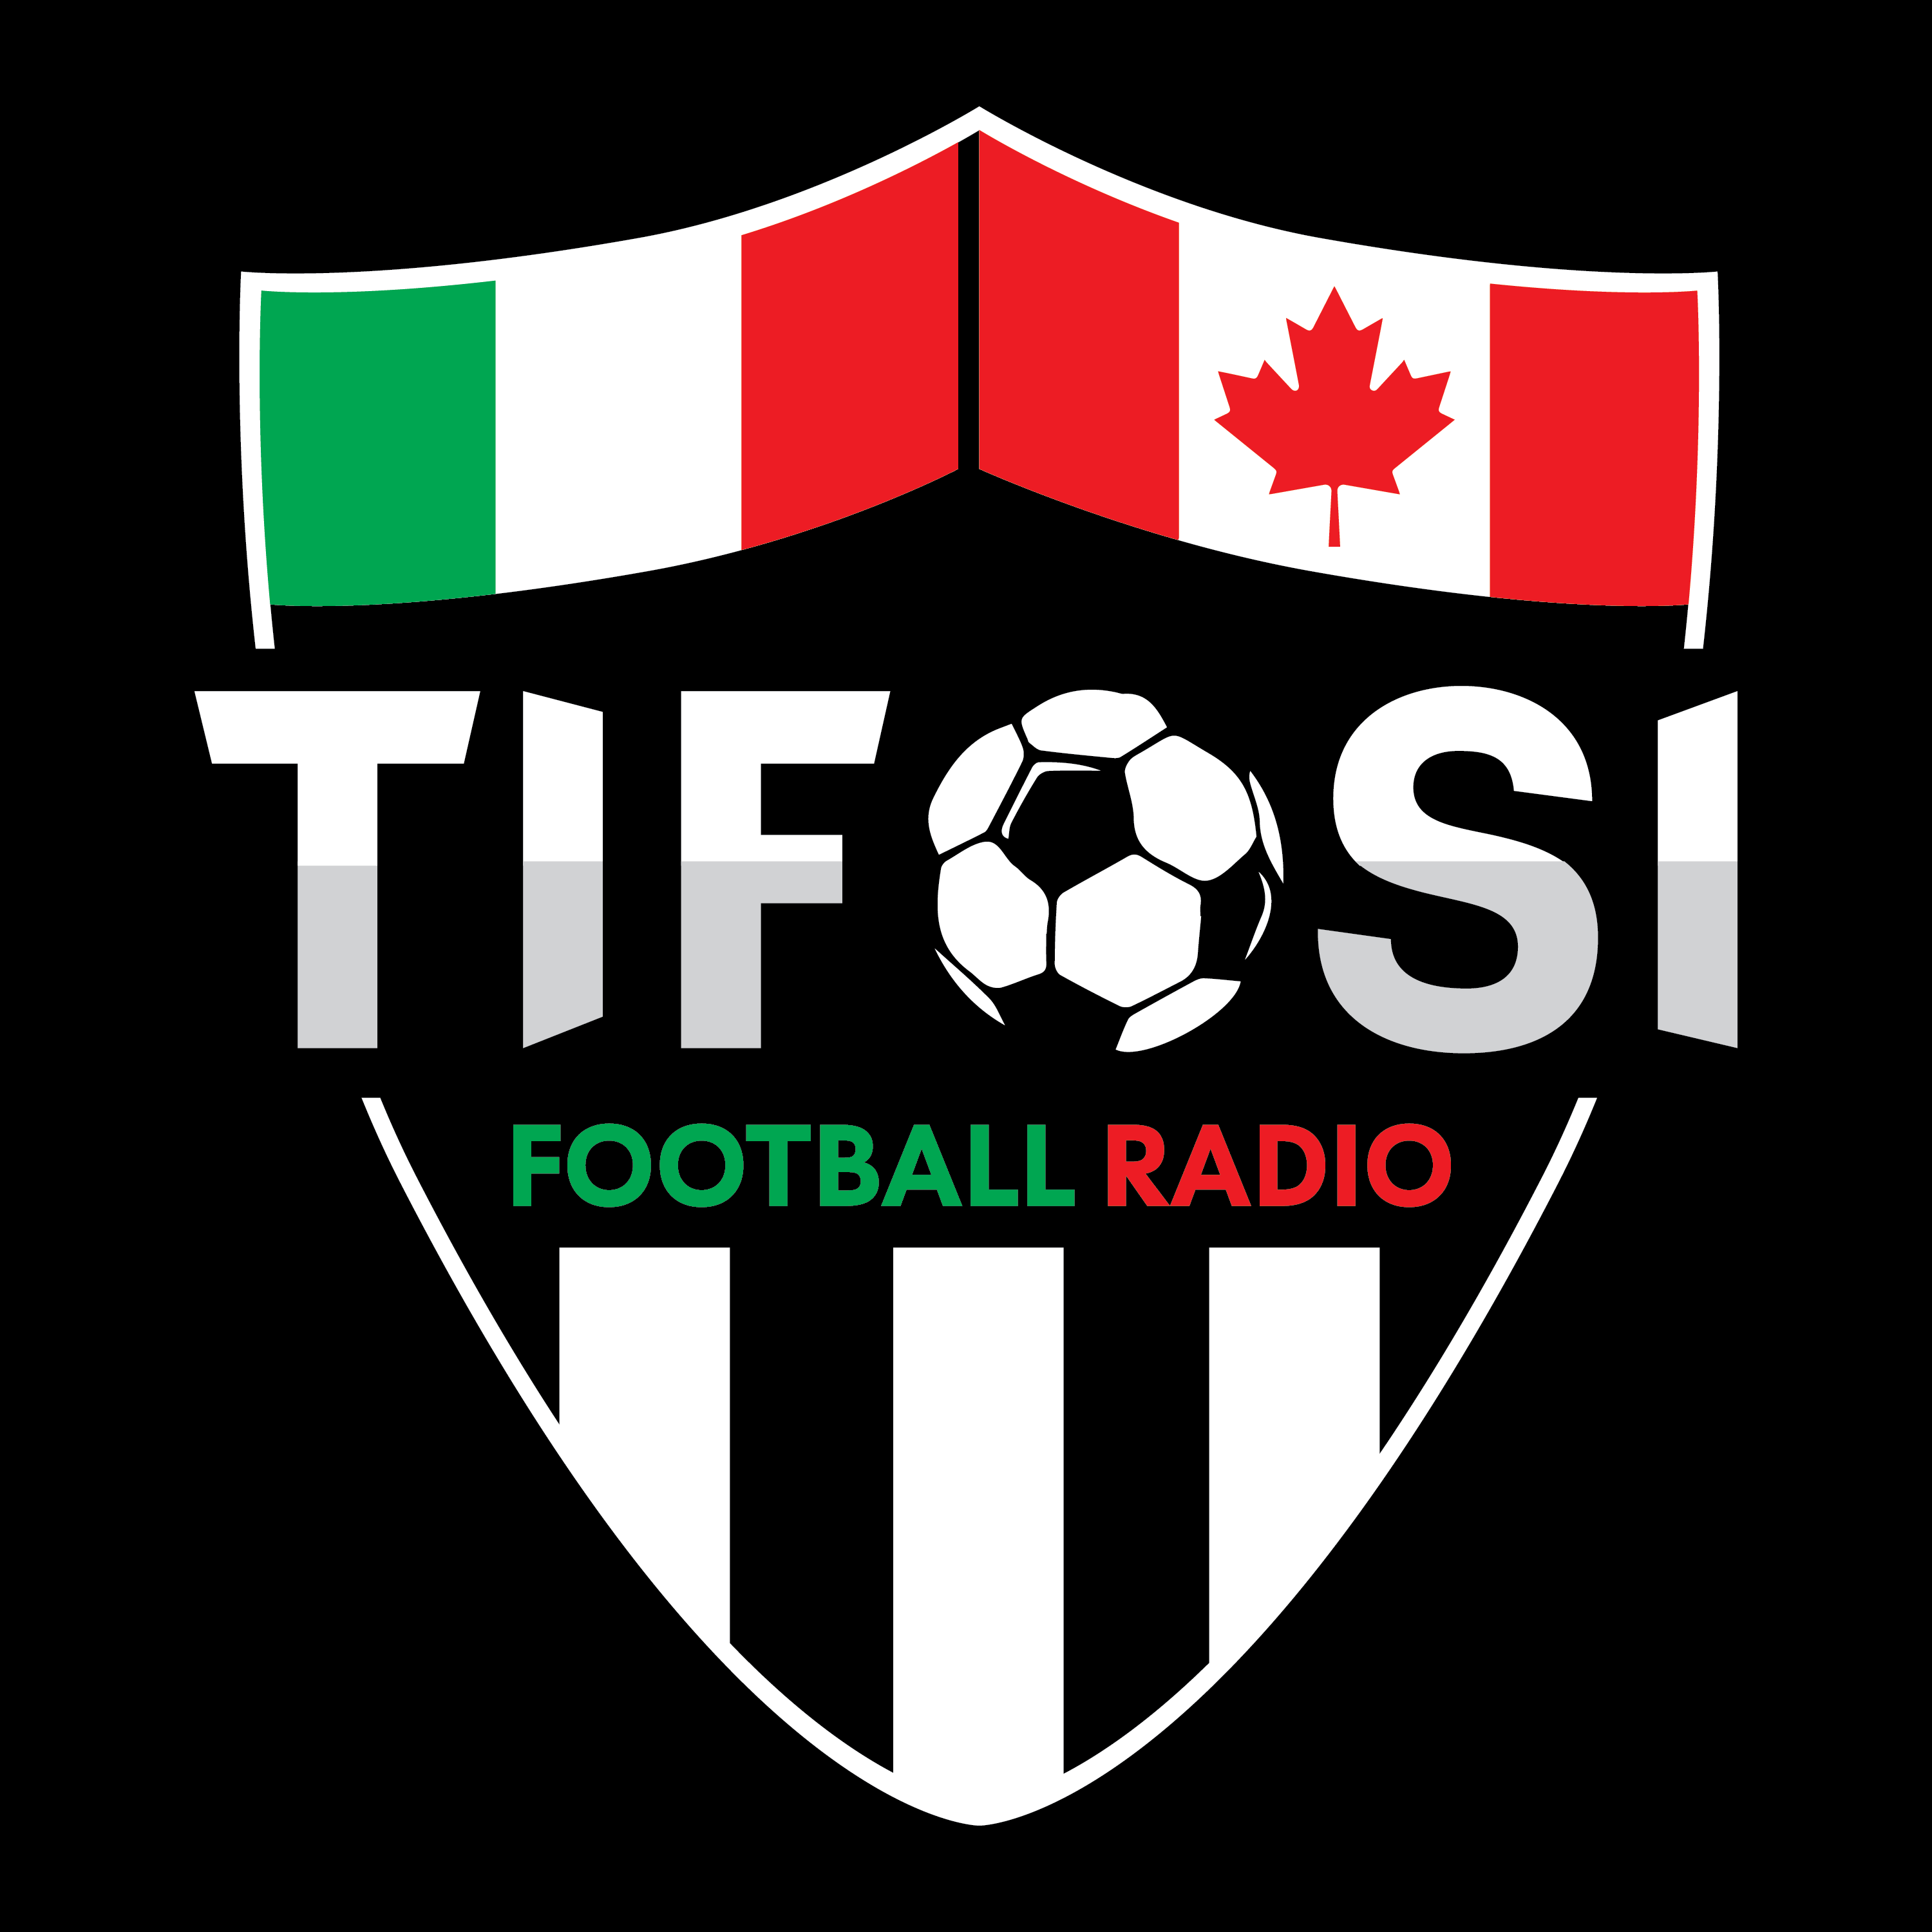 Tifosi Football Radio